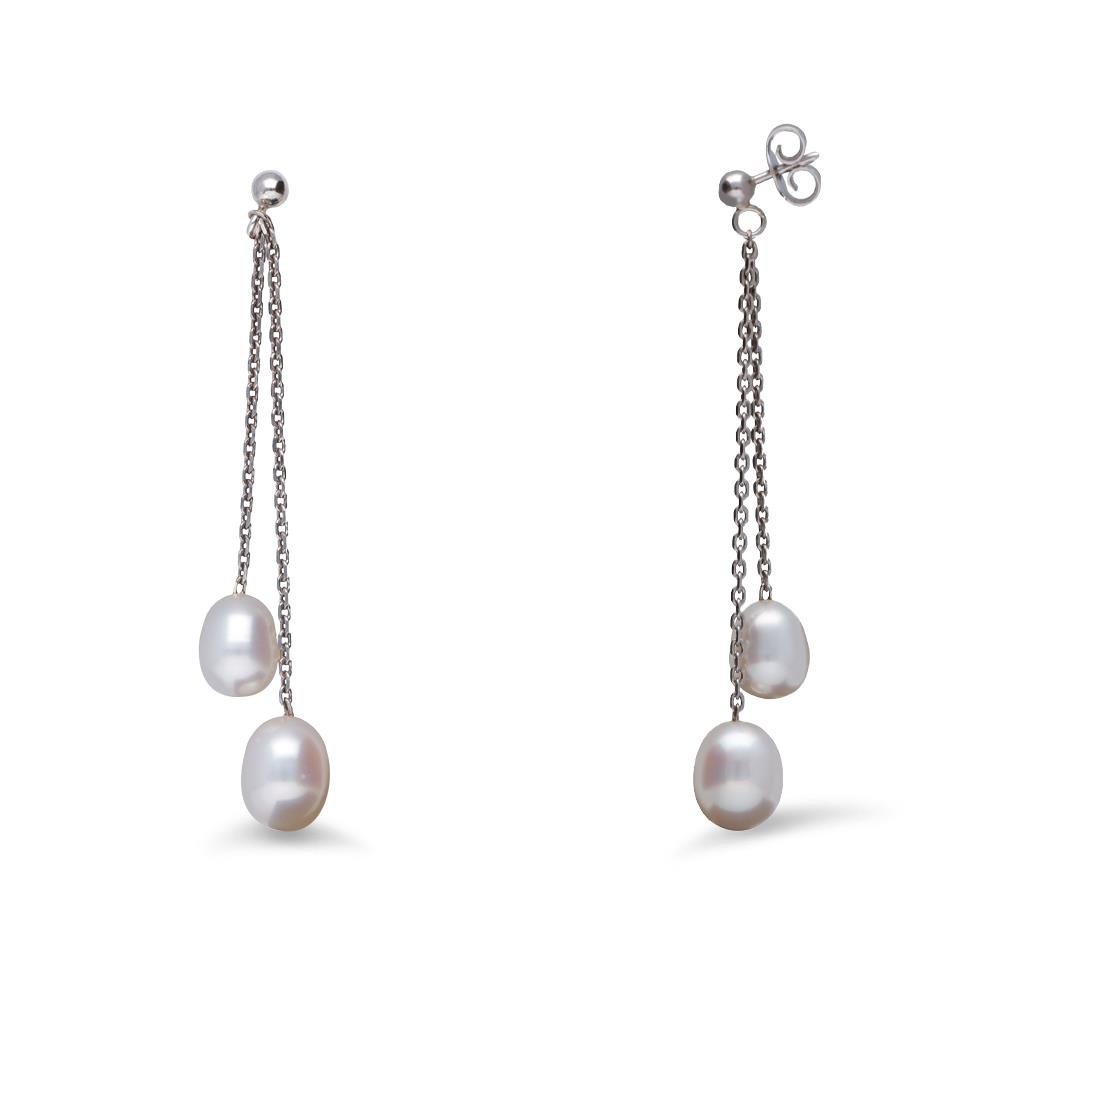 Drop earrings in silver with teardrop pearls - MAYUMI